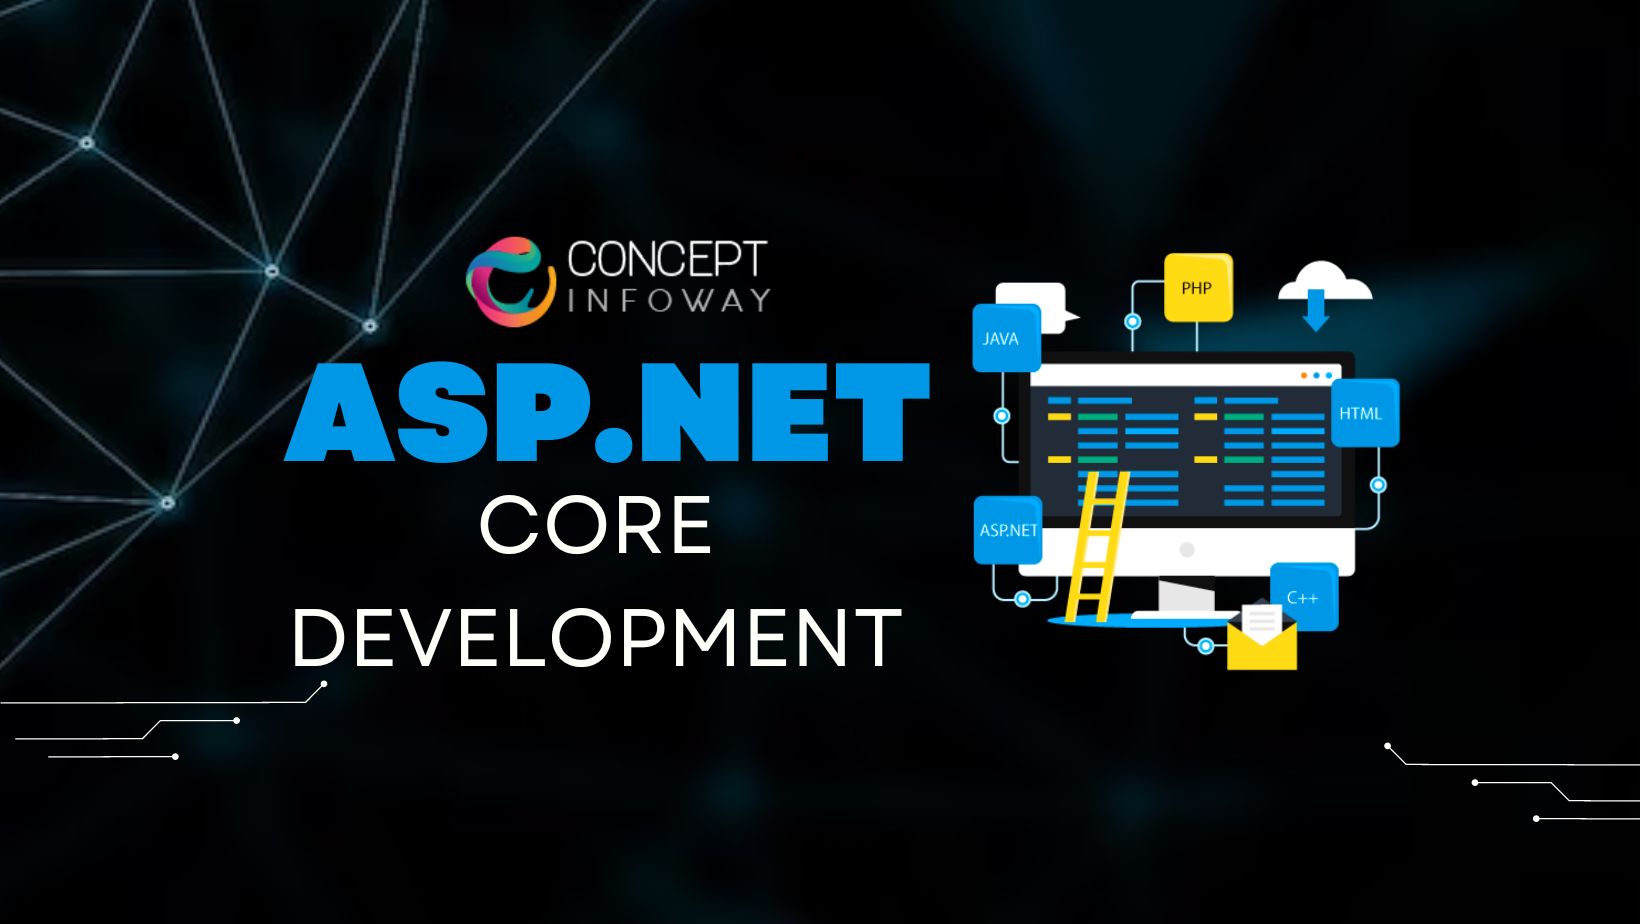 ASP.NET Core Development Company - Concept Infoway